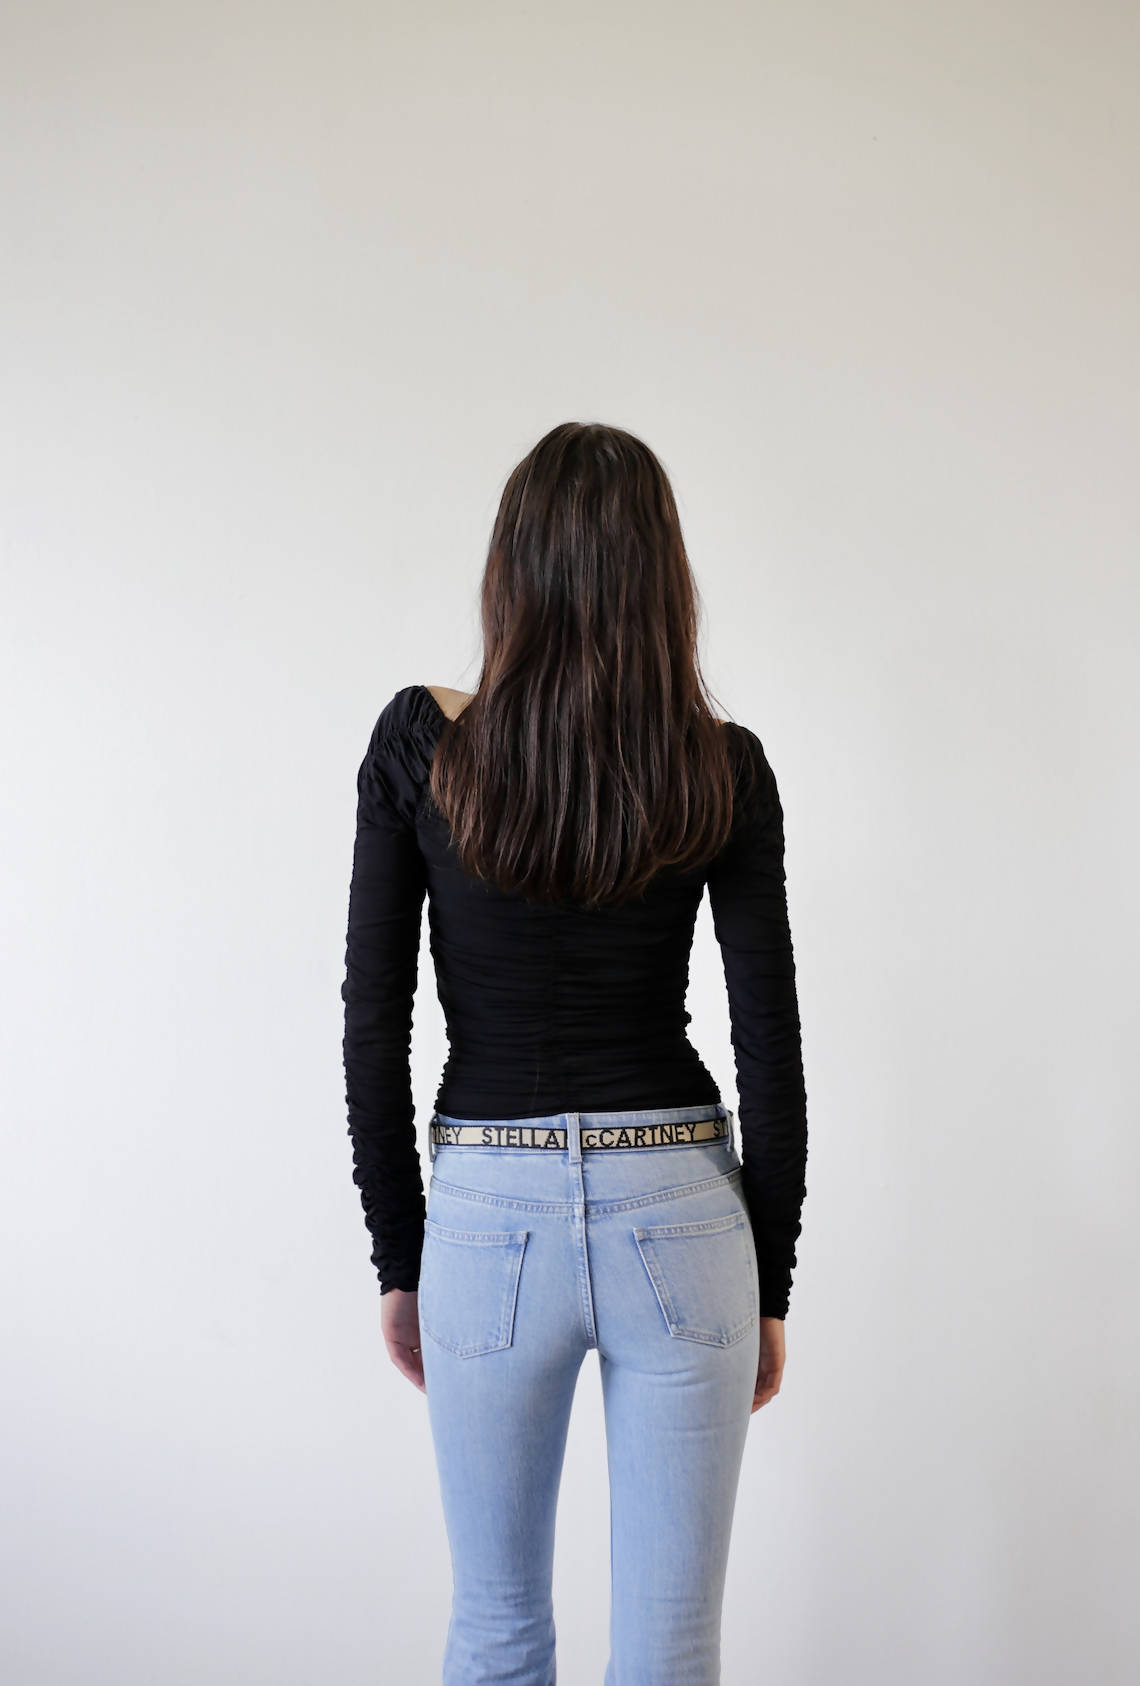 Stella Mcartney Jeans